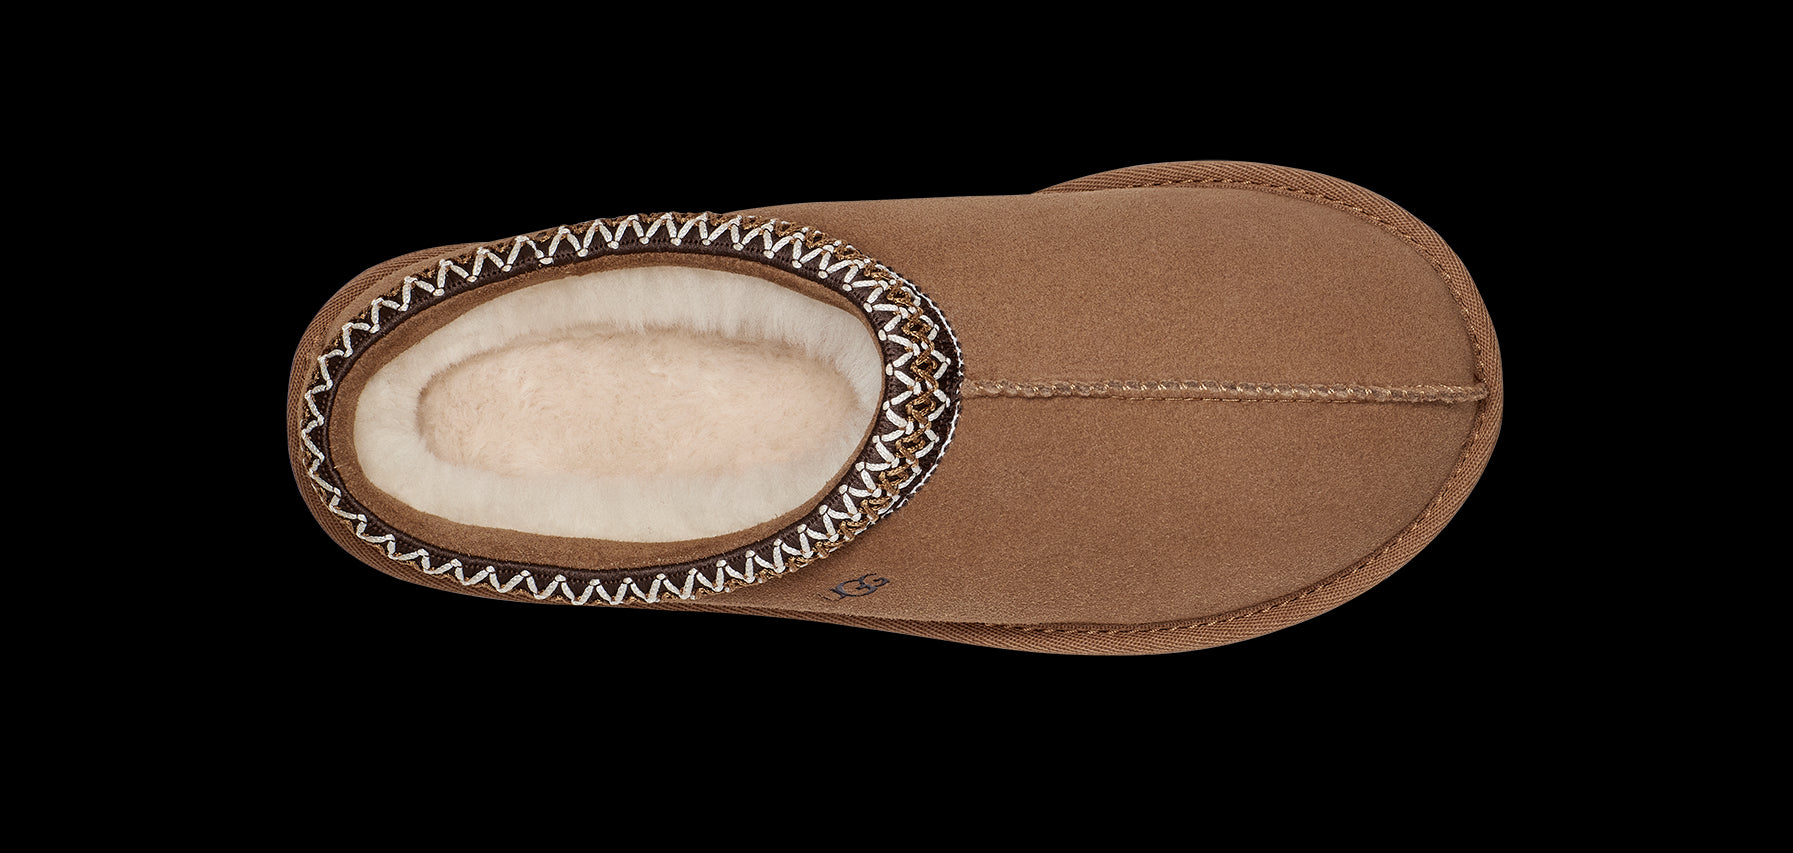 UGG Australia Tasman Women's Slippers 9,5 US - Brown for sale